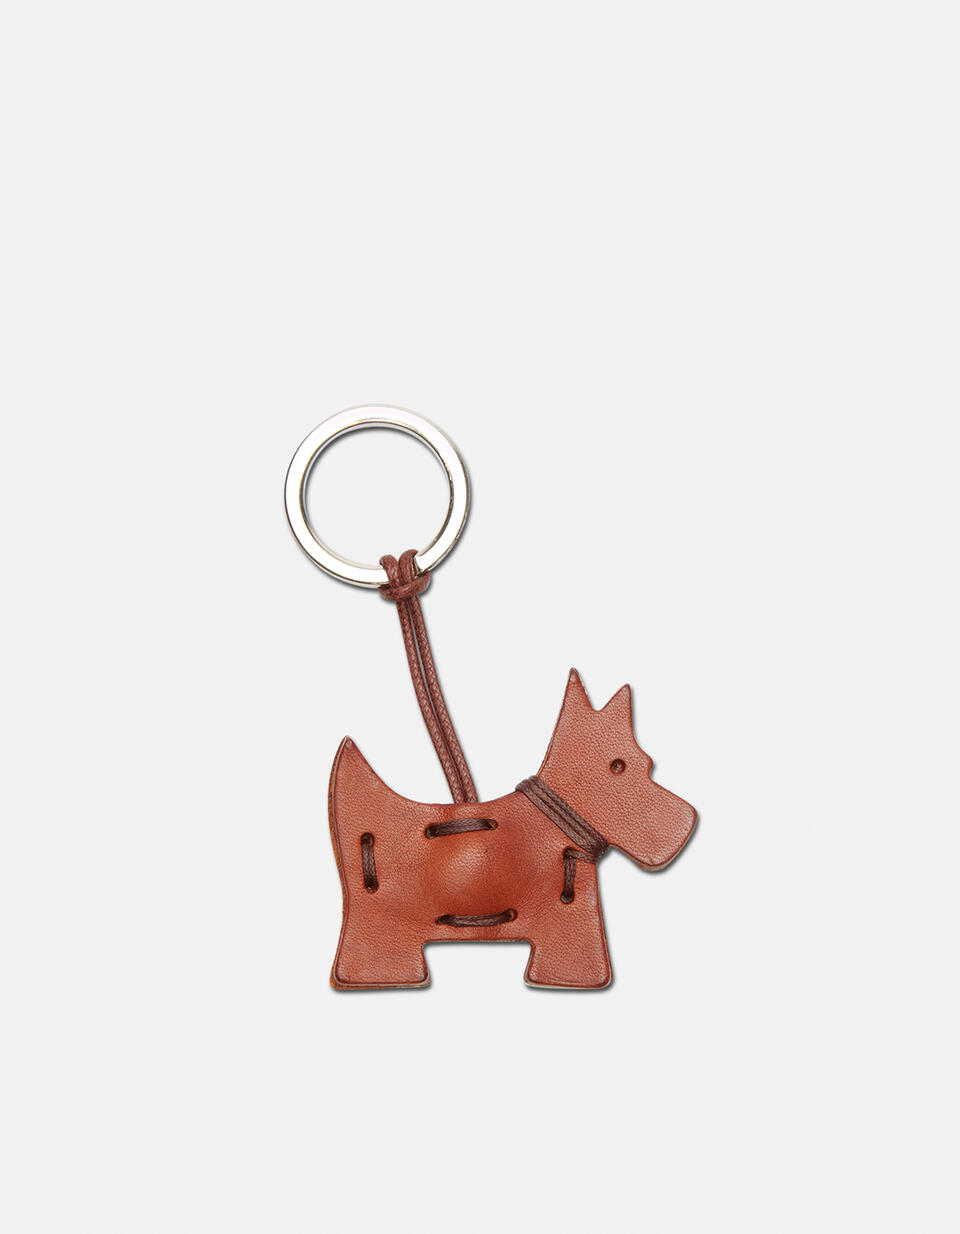 Dog Leather Keychain - Key holders - Women's Accessories | Accessories  - Key holders - Women's Accessories | AccessoriesCuoieria Fiorentina